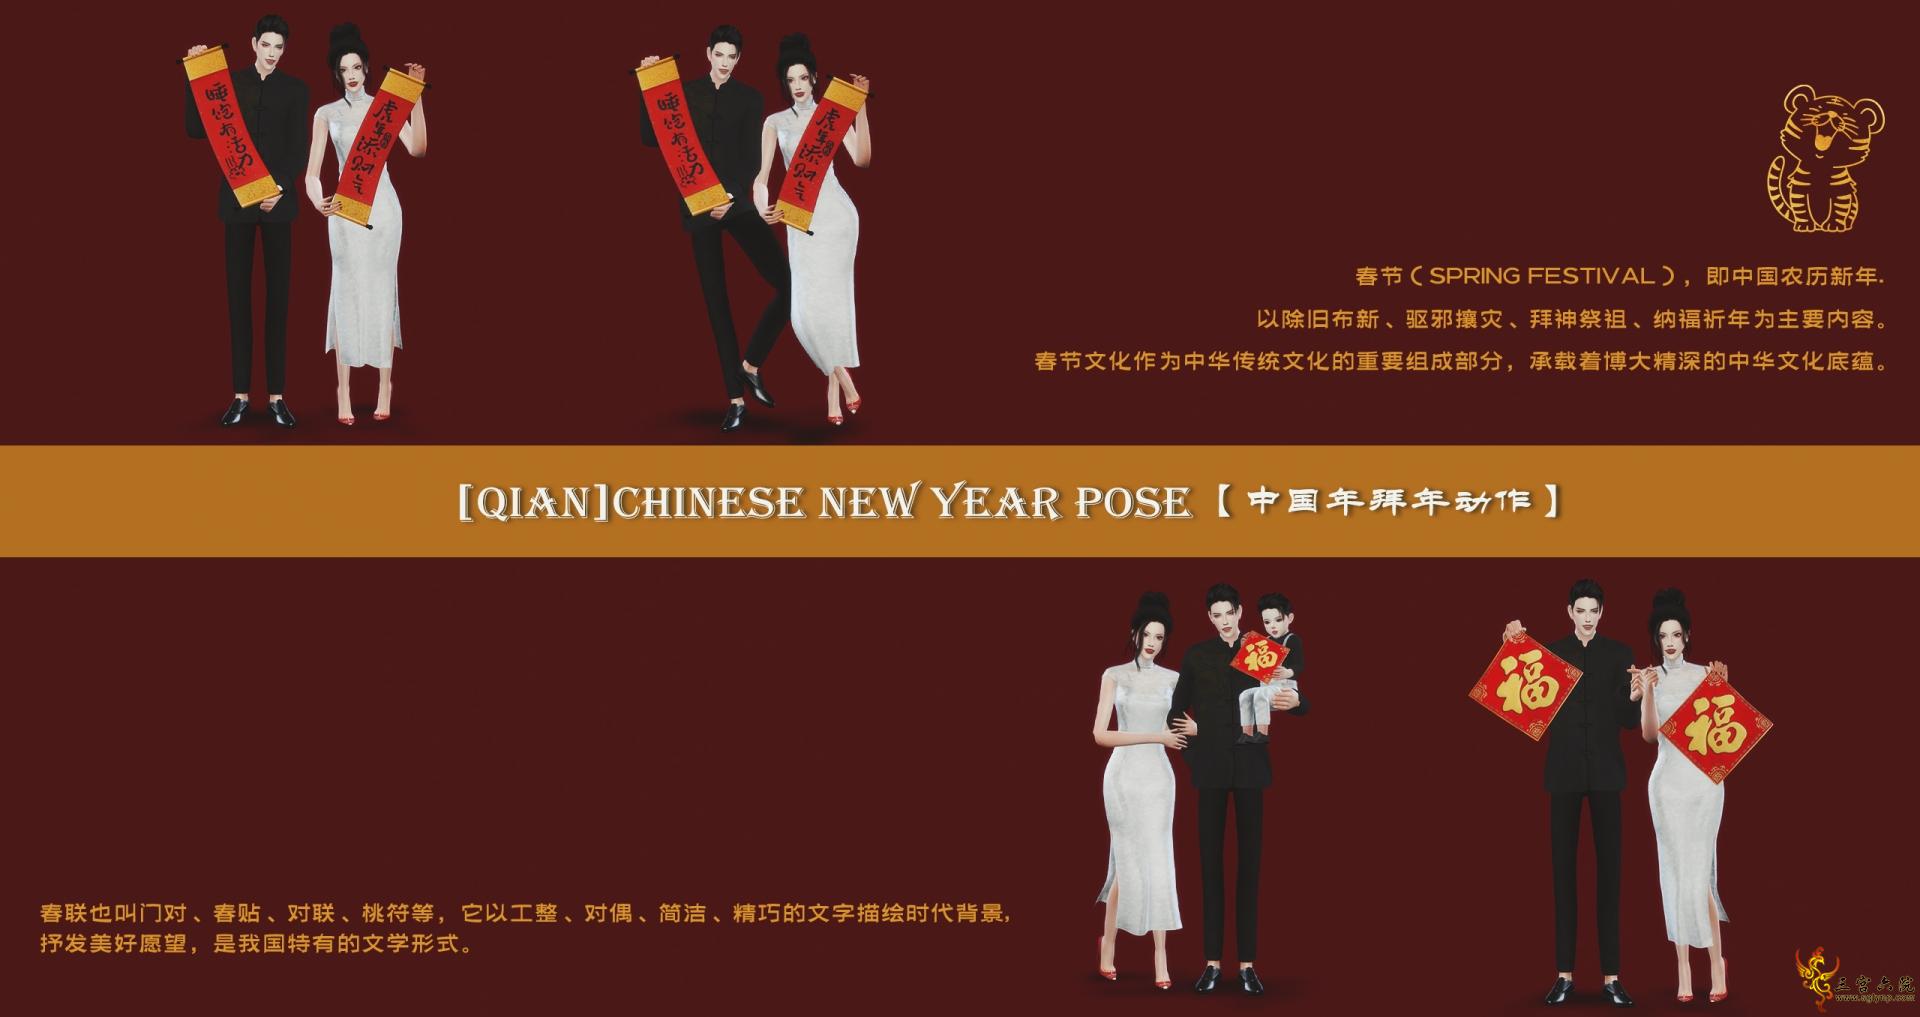 [Qian]Chinese new year pose.jpg